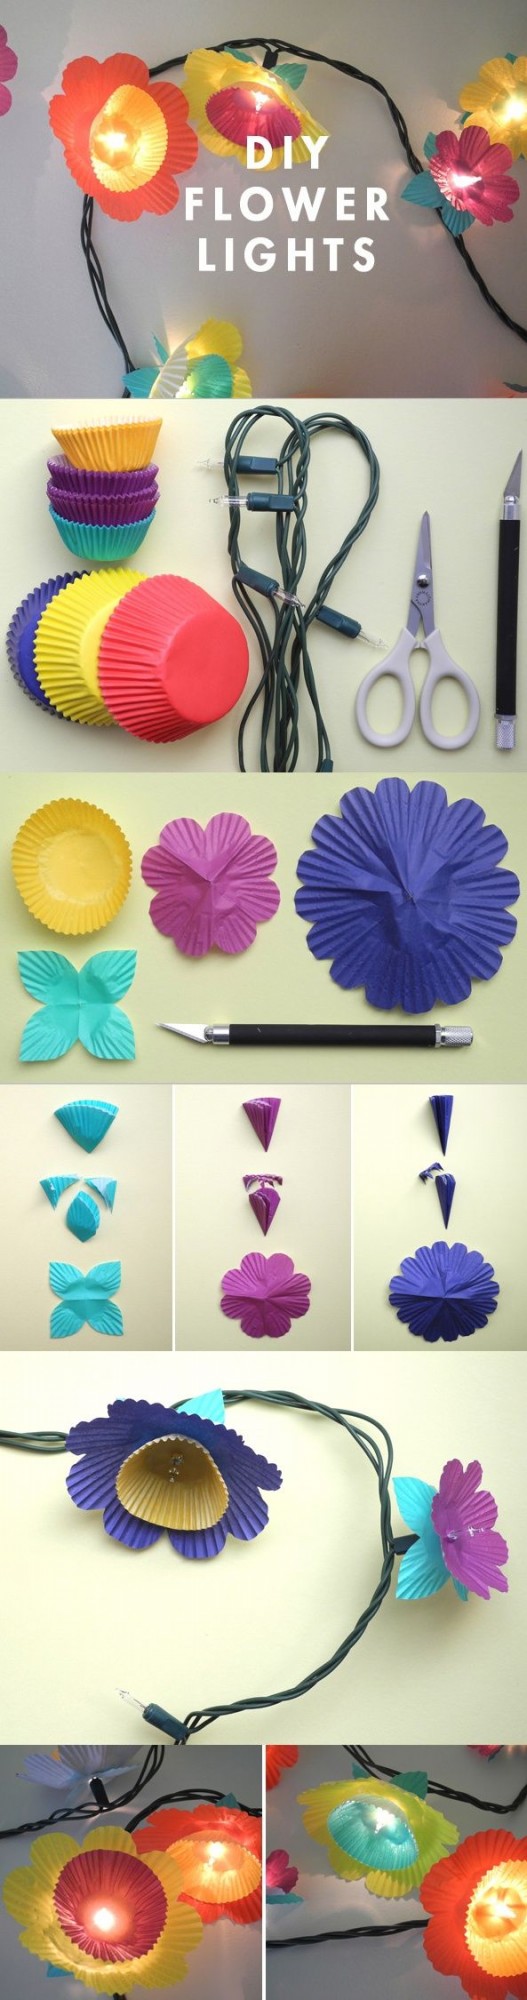 23 Cute and Simple DIY Home Crafts Tutorials 2 527x2000 16 Creative & Useful DIY Ideas